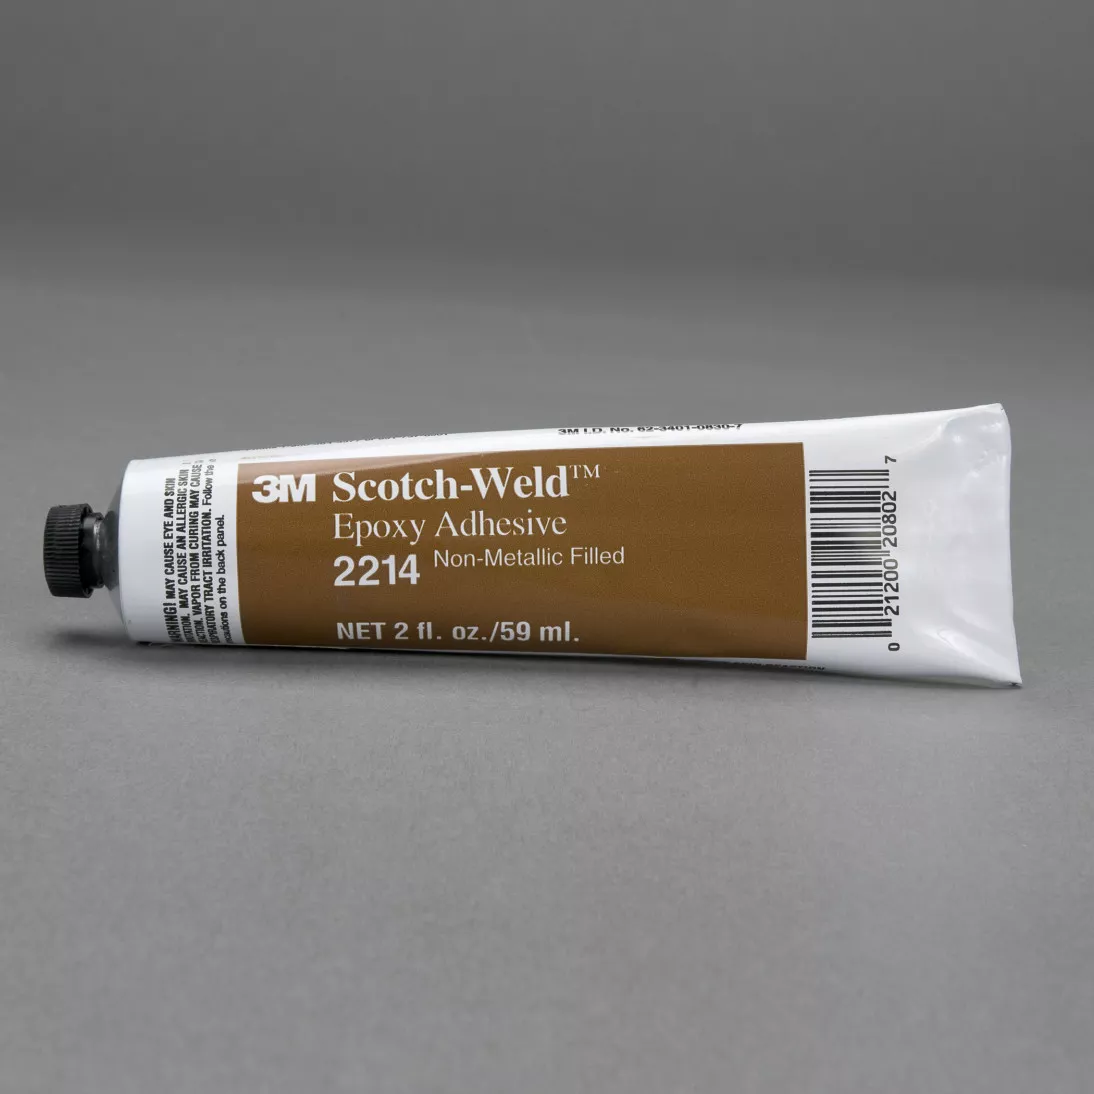 3M™ Scotch-Weld™ Epoxy Adhesive 2214 Non-Metallic Filled, Cream, 2 fl oz
Tube, 6/Case